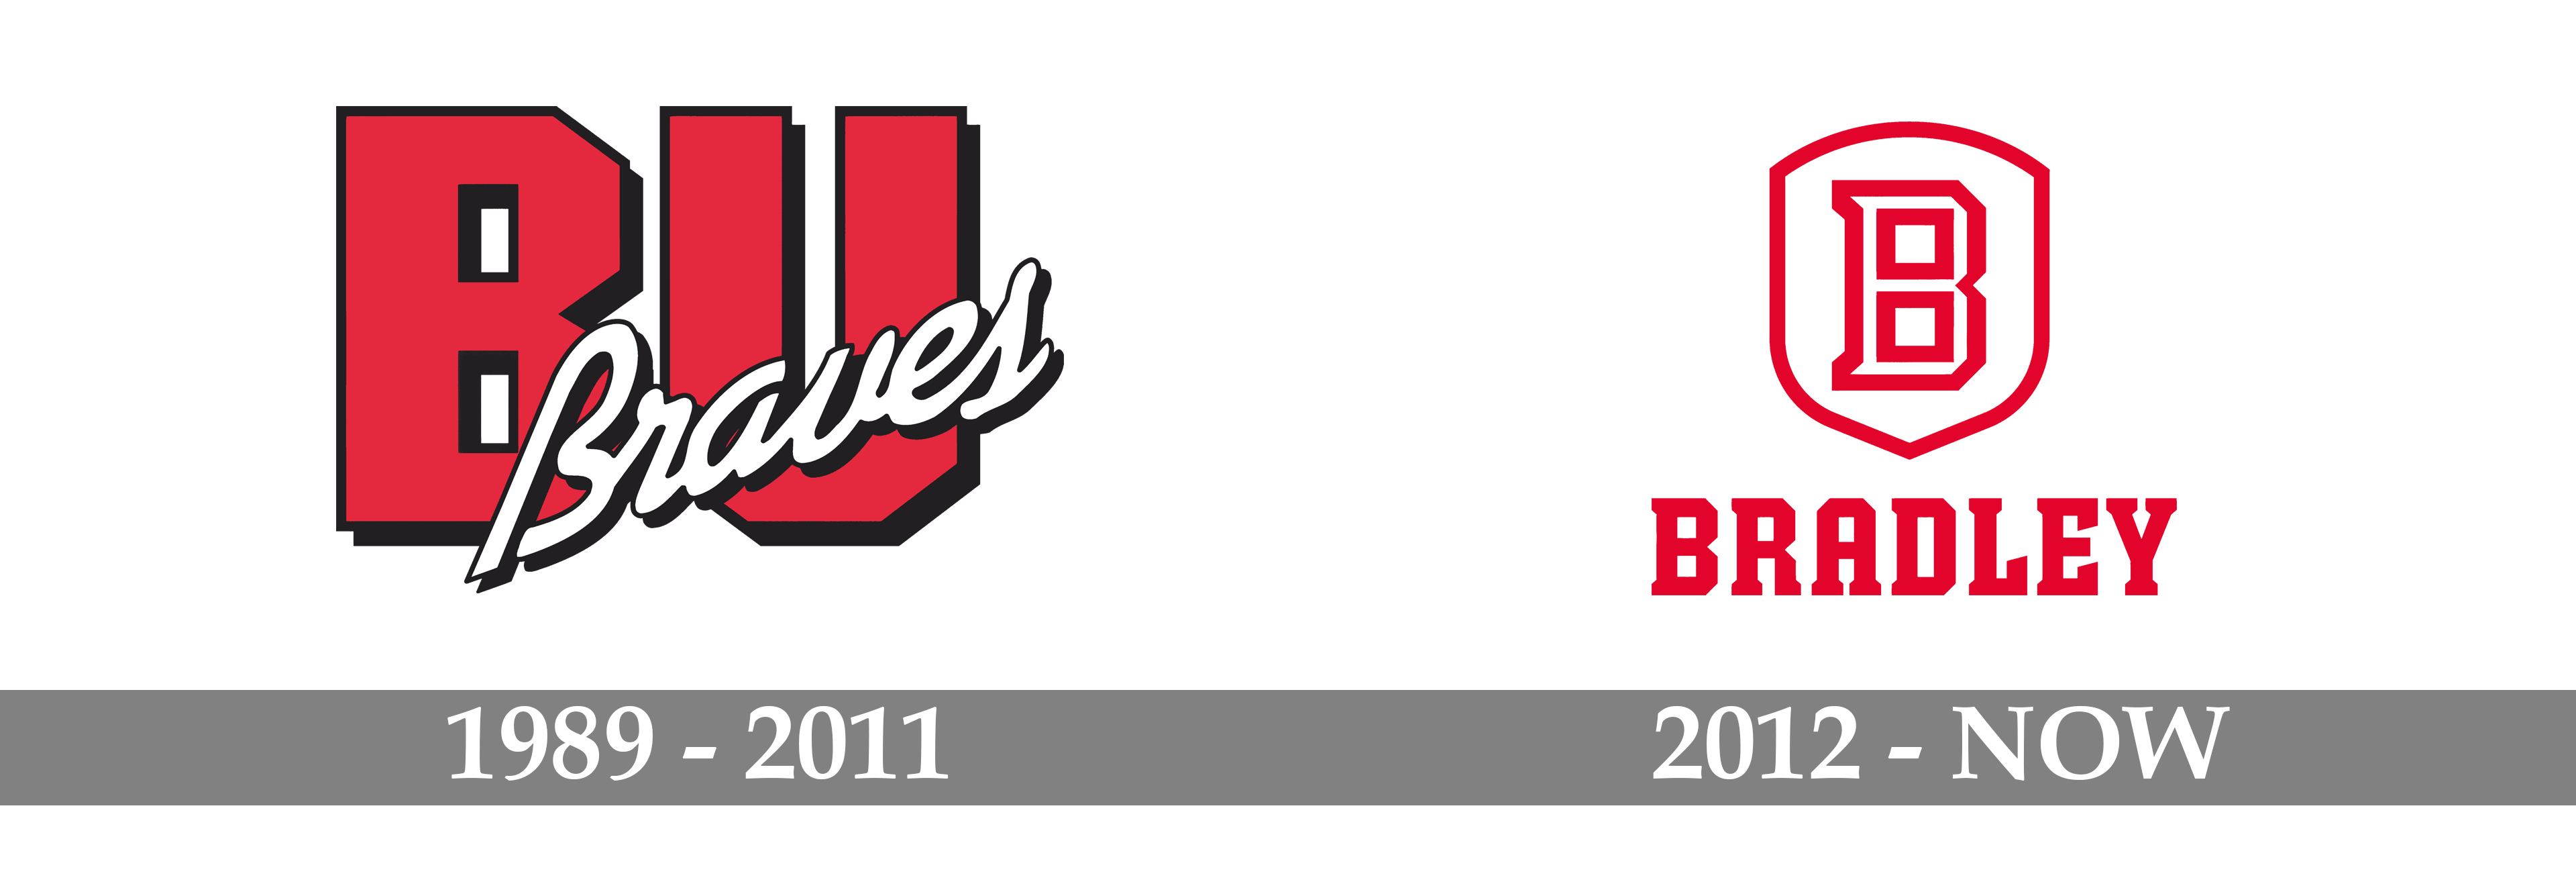 https://1000logos.net/wp-content/uploads/2022/04/Bradley-Braves-Logo-history.png